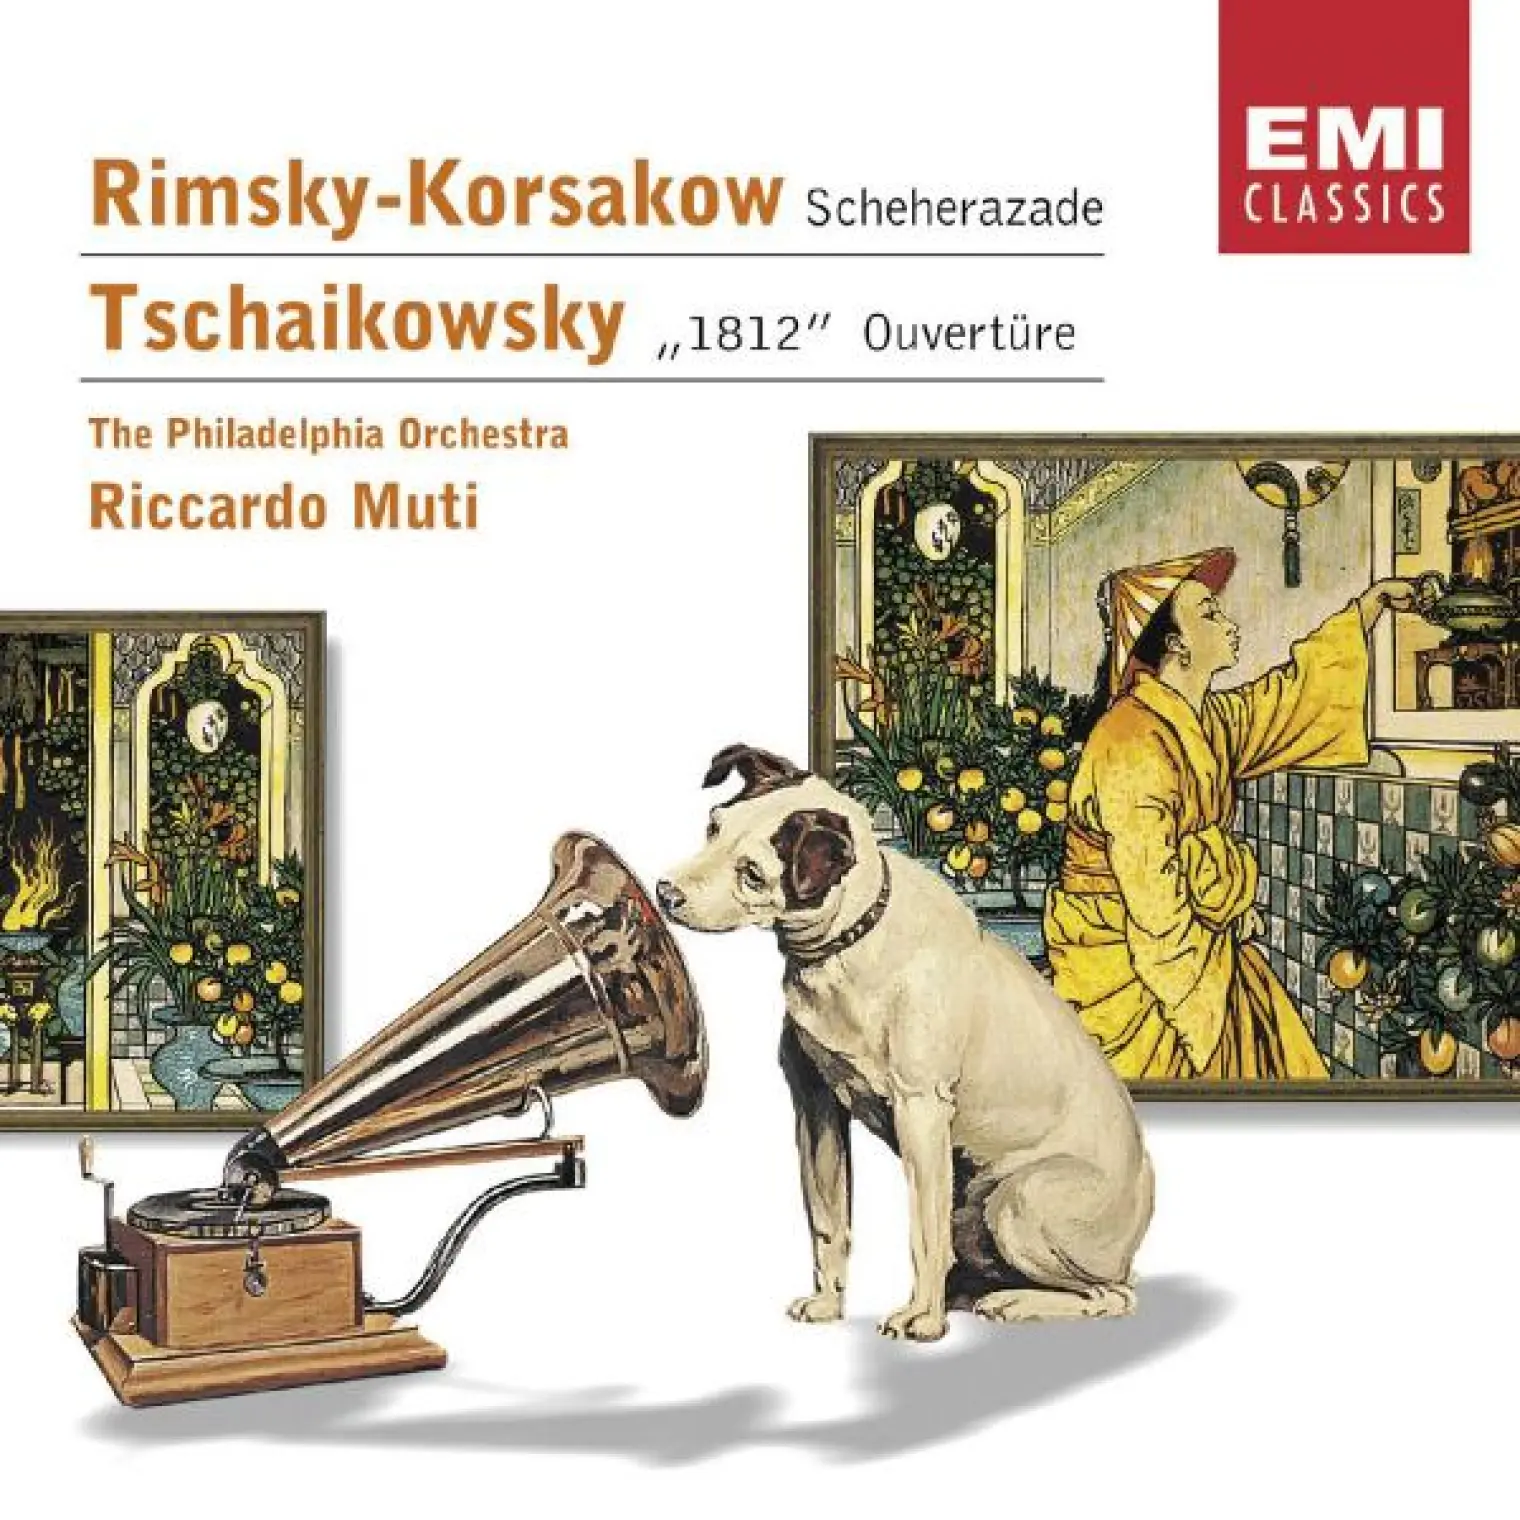 Rimsky-Korsakov: Scheherazade - Tchaikovsky: 1812 Overture -  Philadelphia Orchestra 